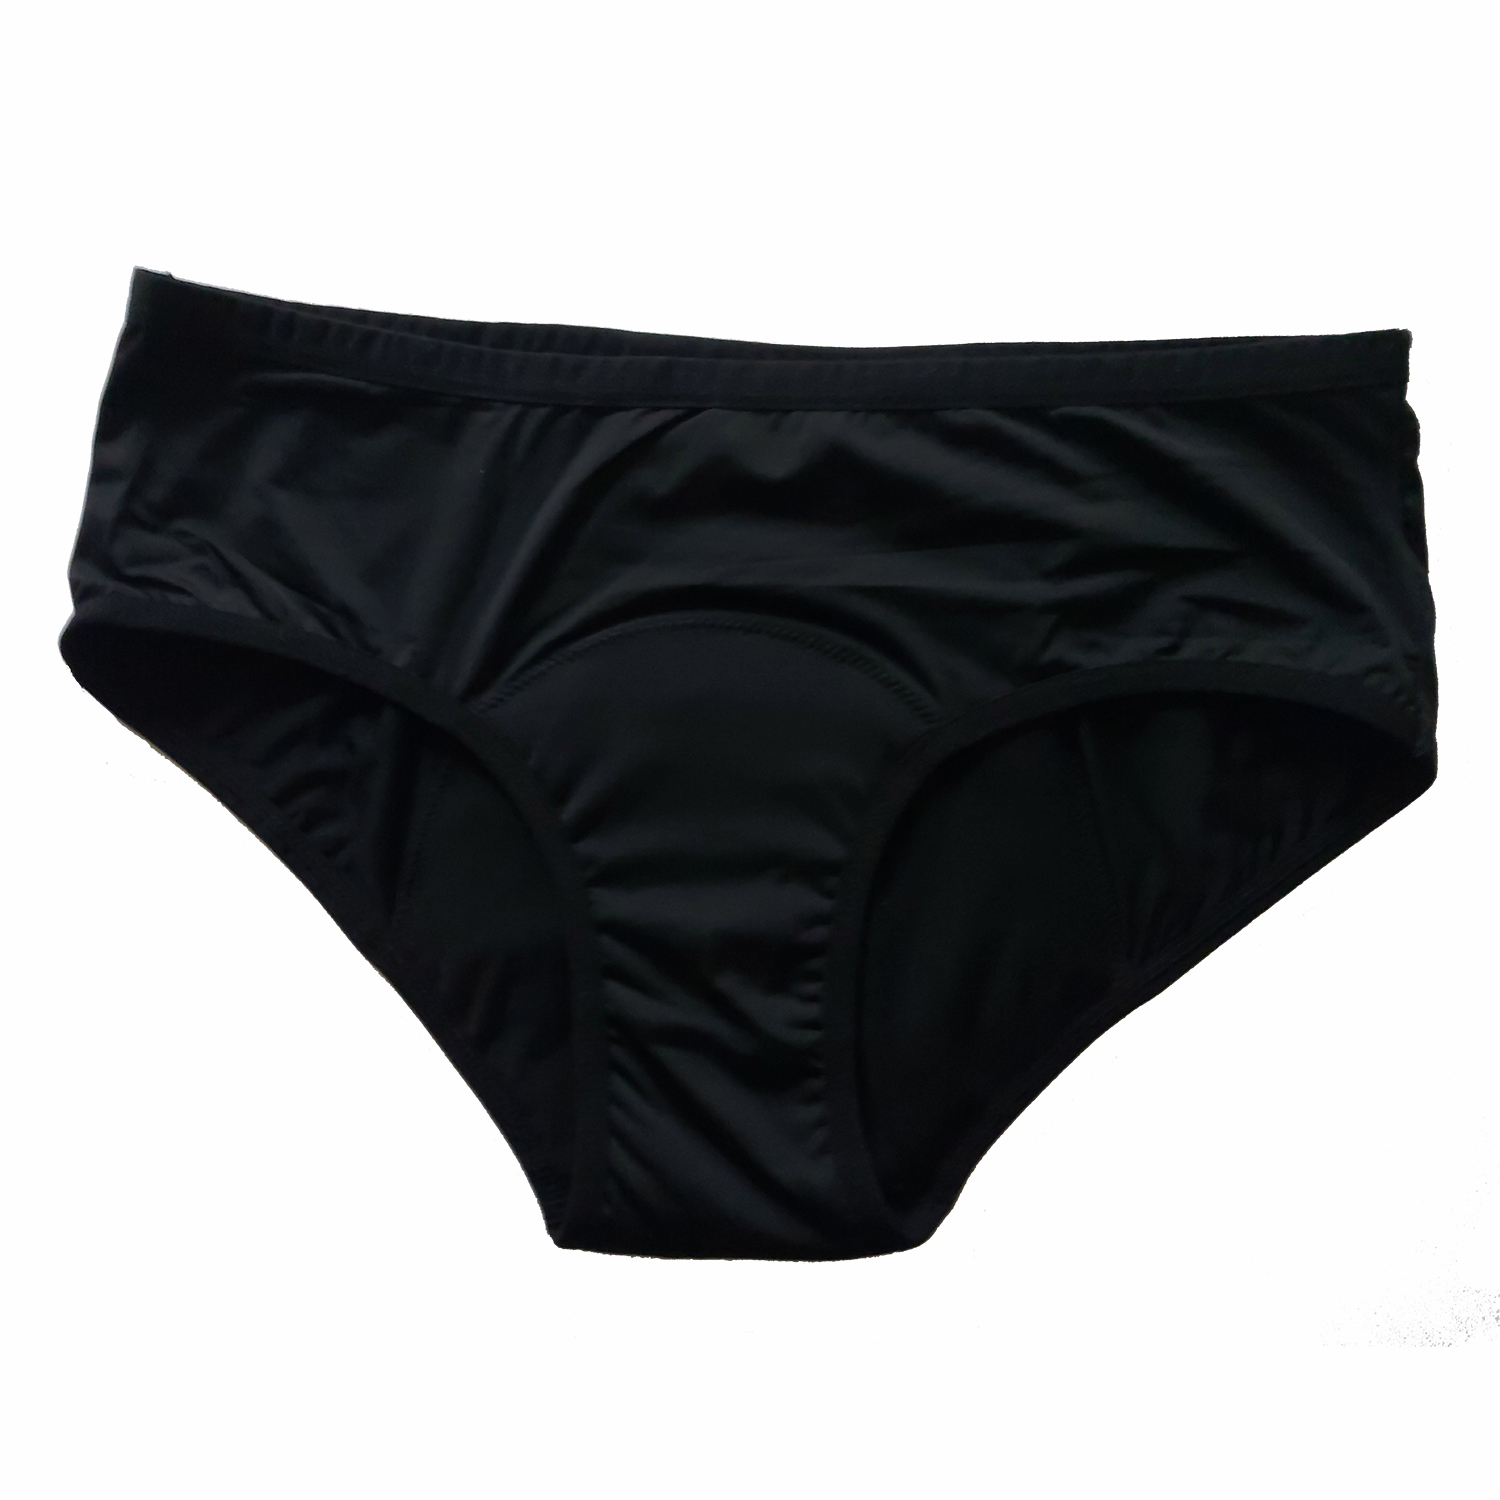 Lycra Brief Style Period Underwear | Confidence Period Panties